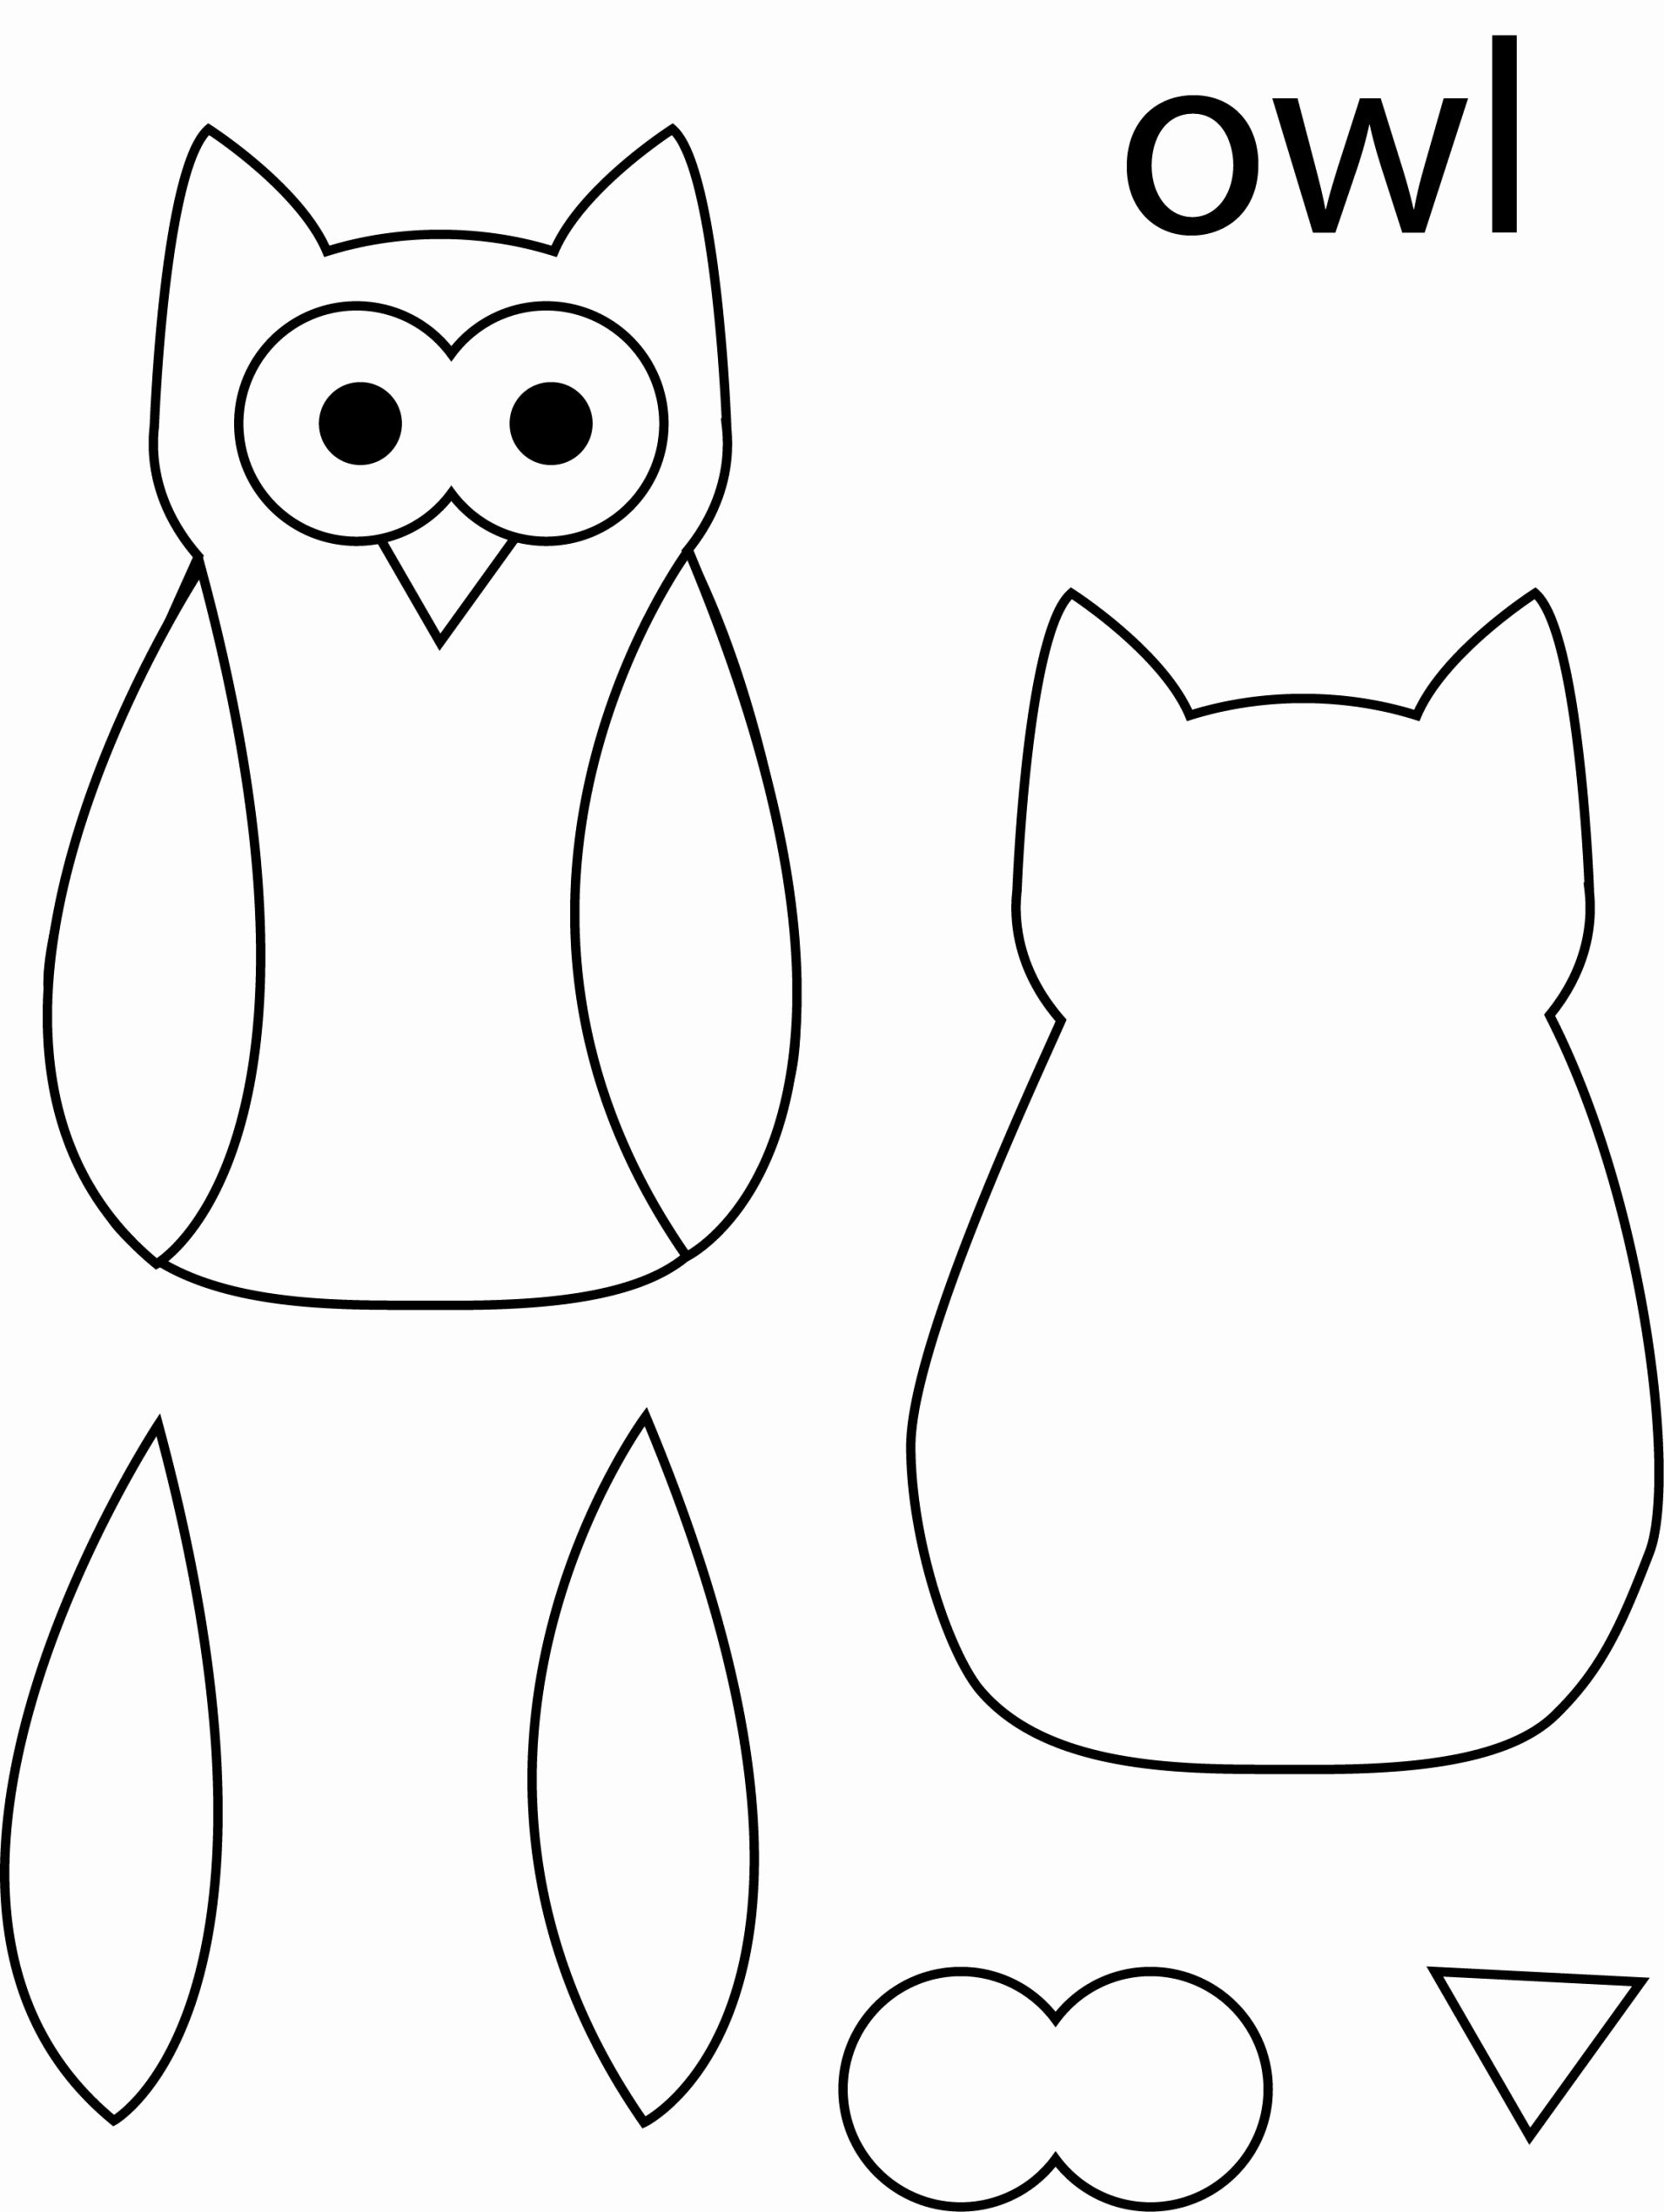 Free Printable Owl Template Beautiful Printable Owl Template for Kids